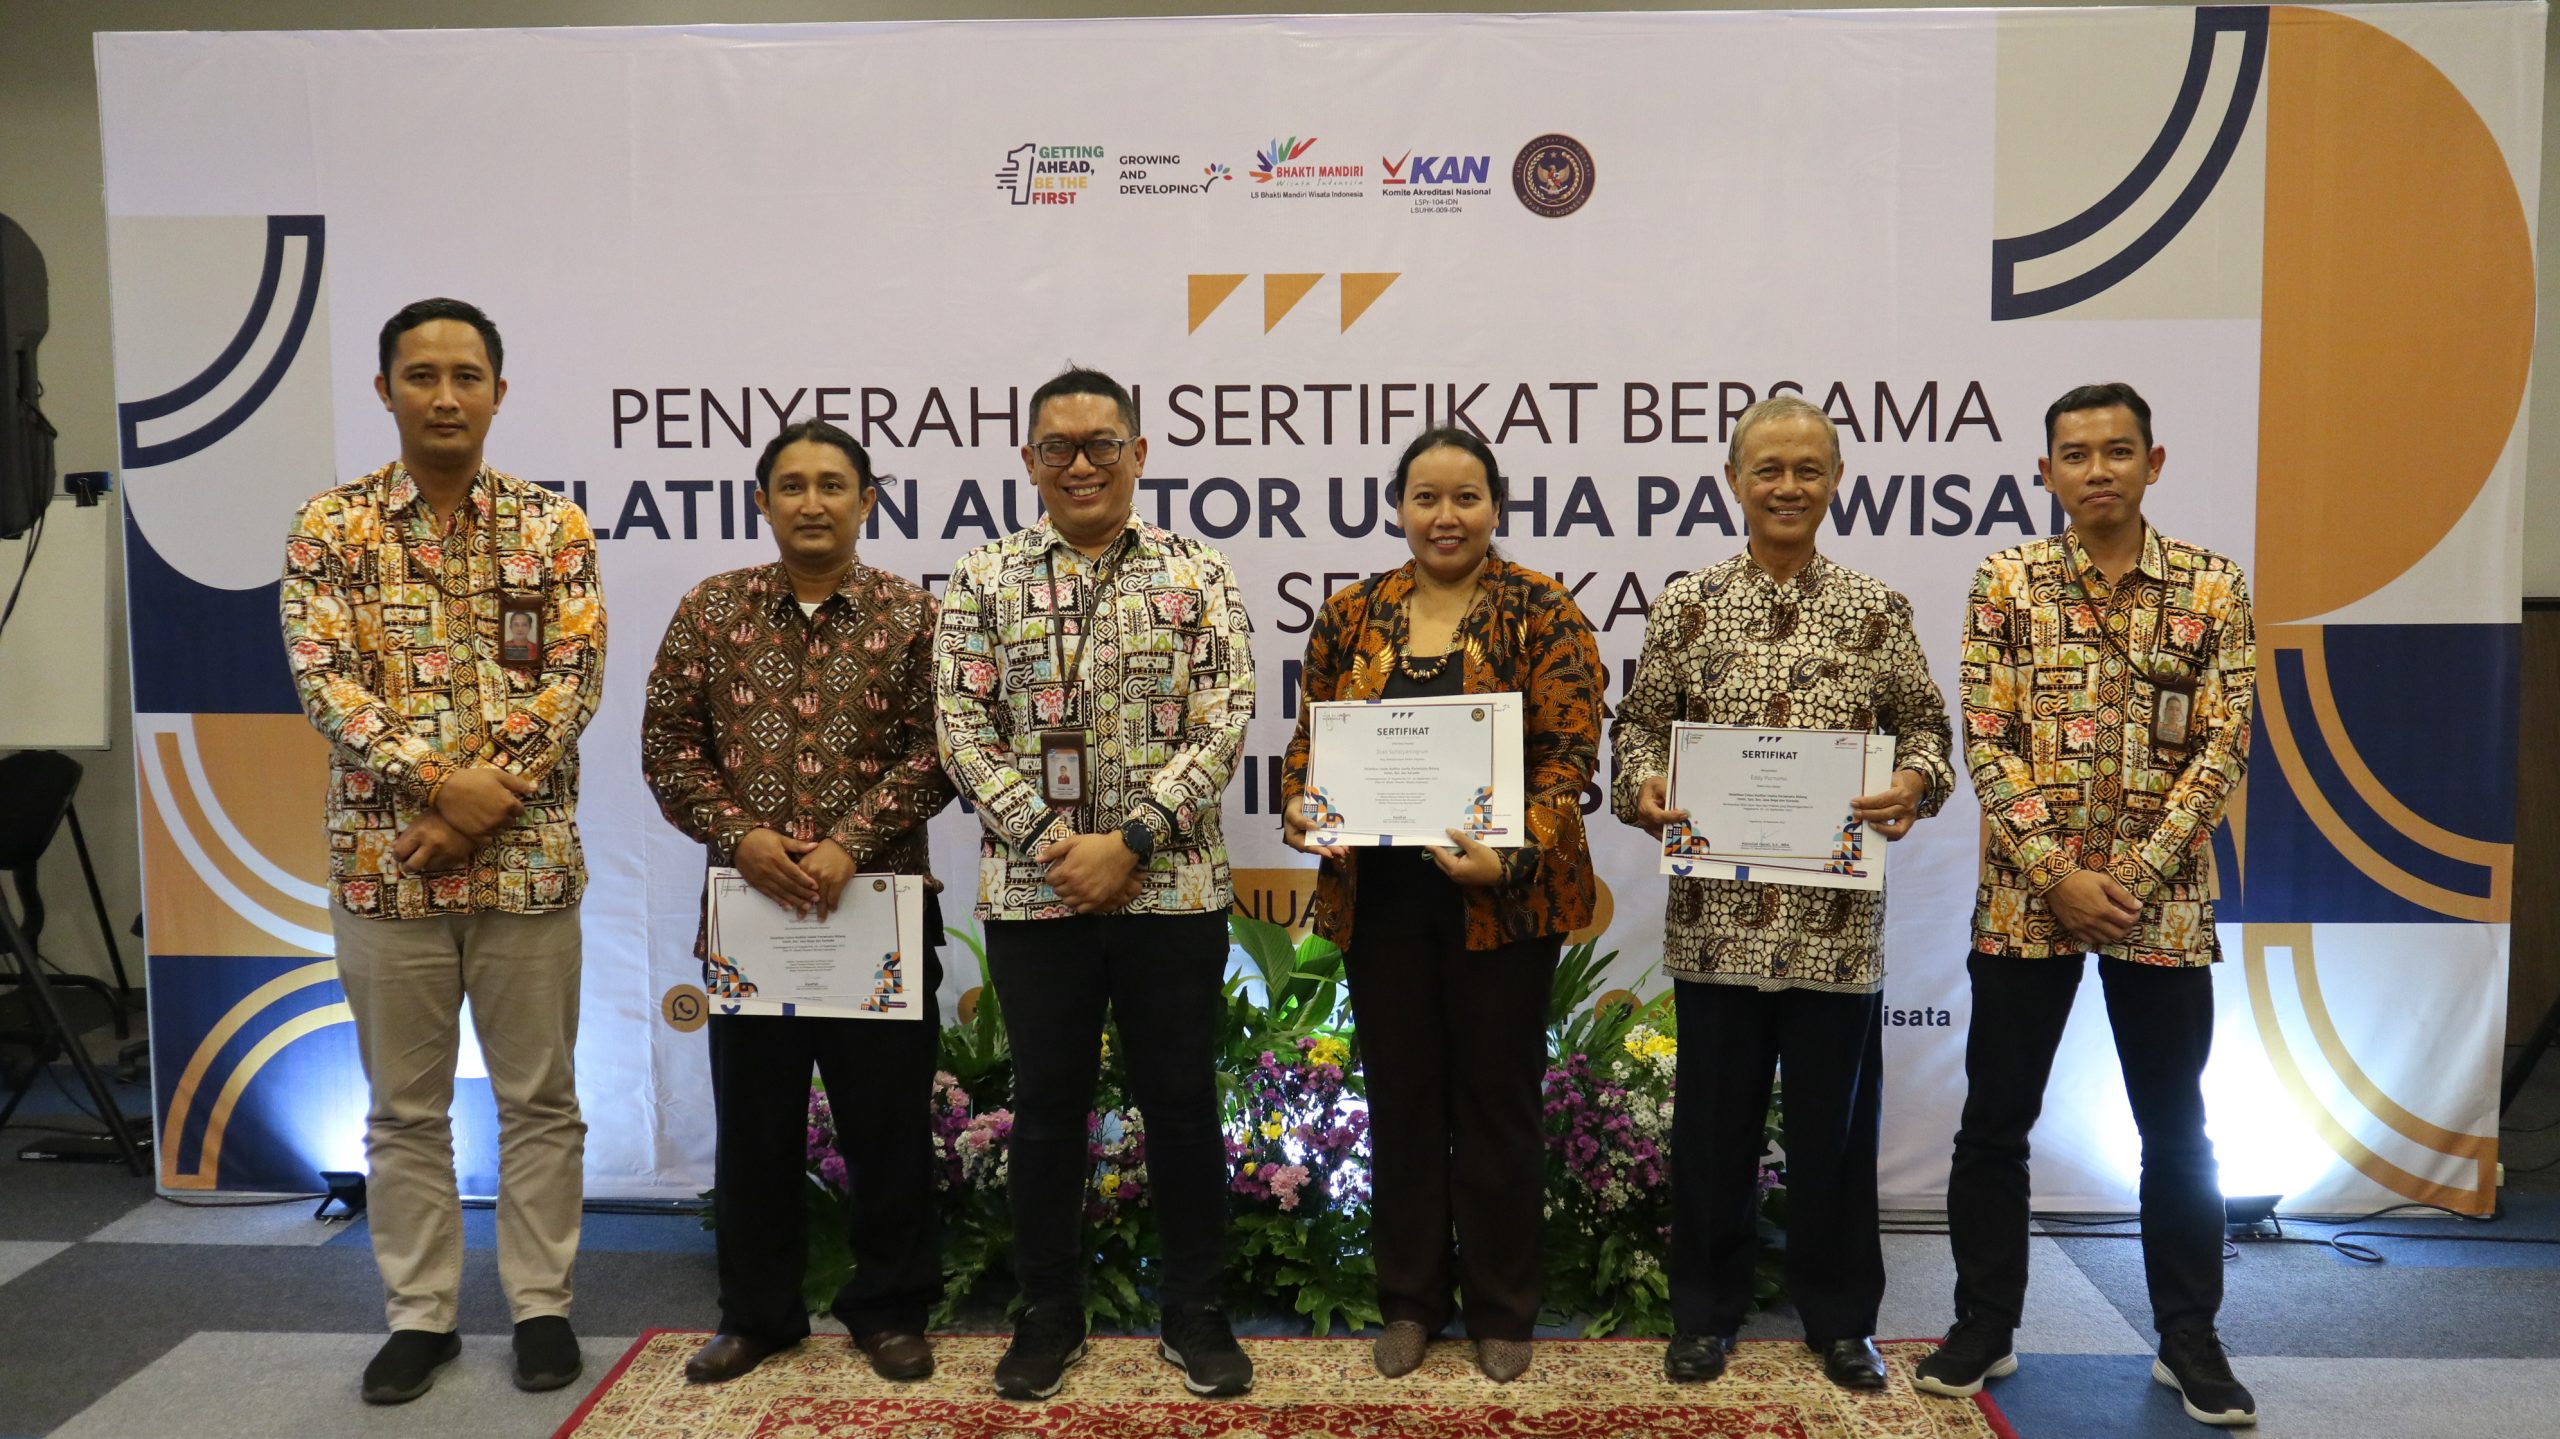 LS BMWI Melaksanakan Penyerahan Sertifikat Auditor Usaha Pariwisata di Yogyakarta